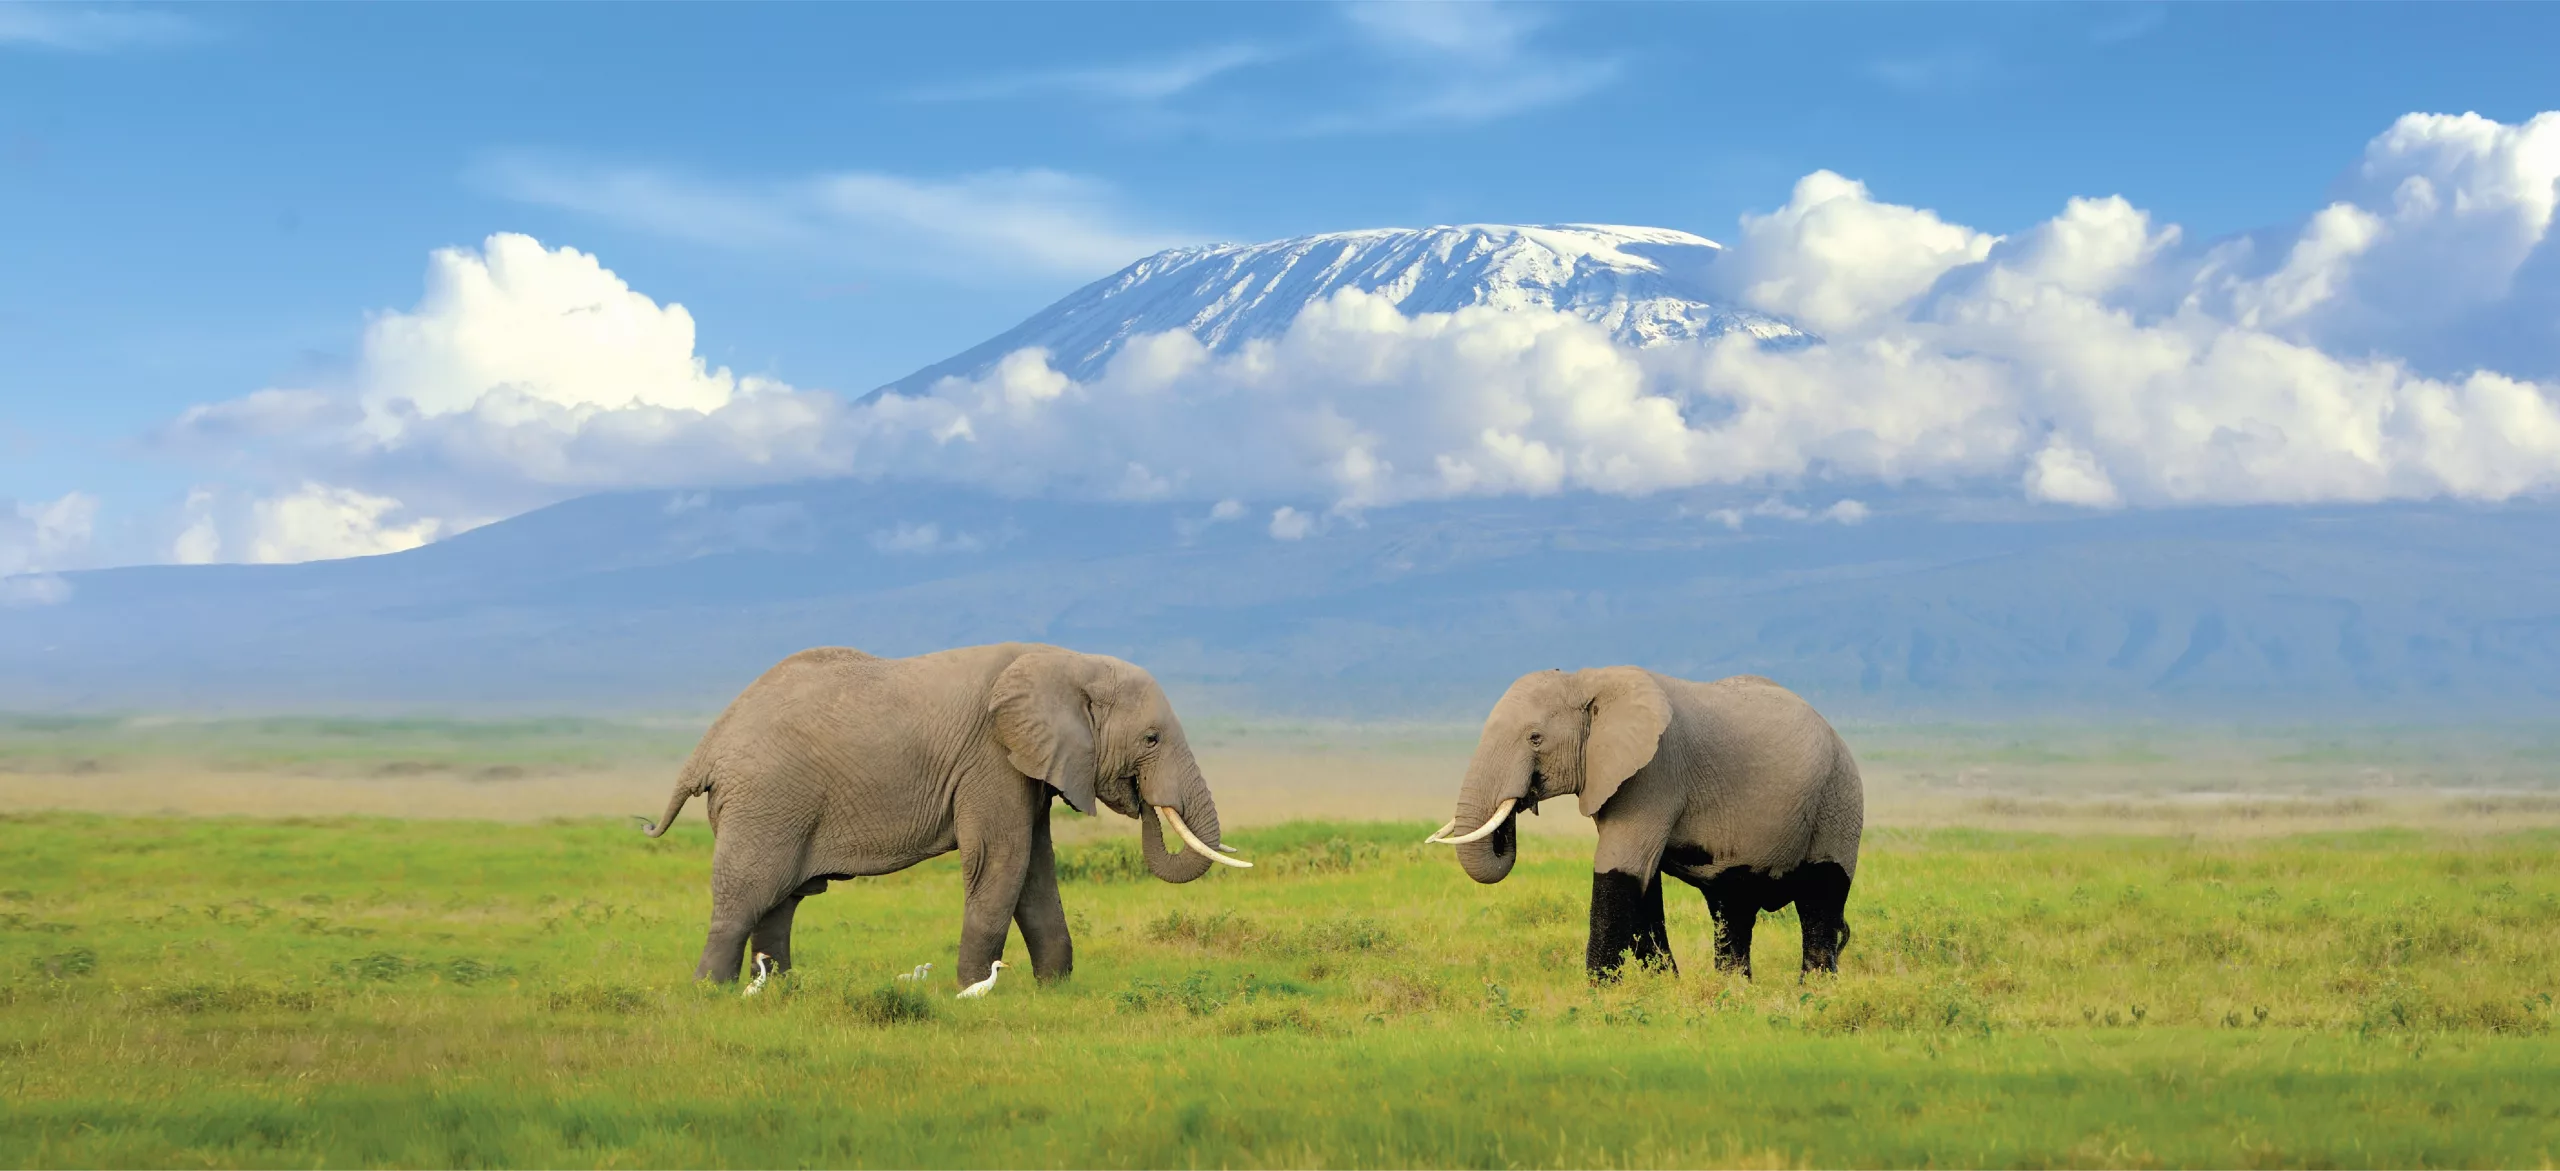 Mount Kilimanjaro – The Highest Mountain in Africa